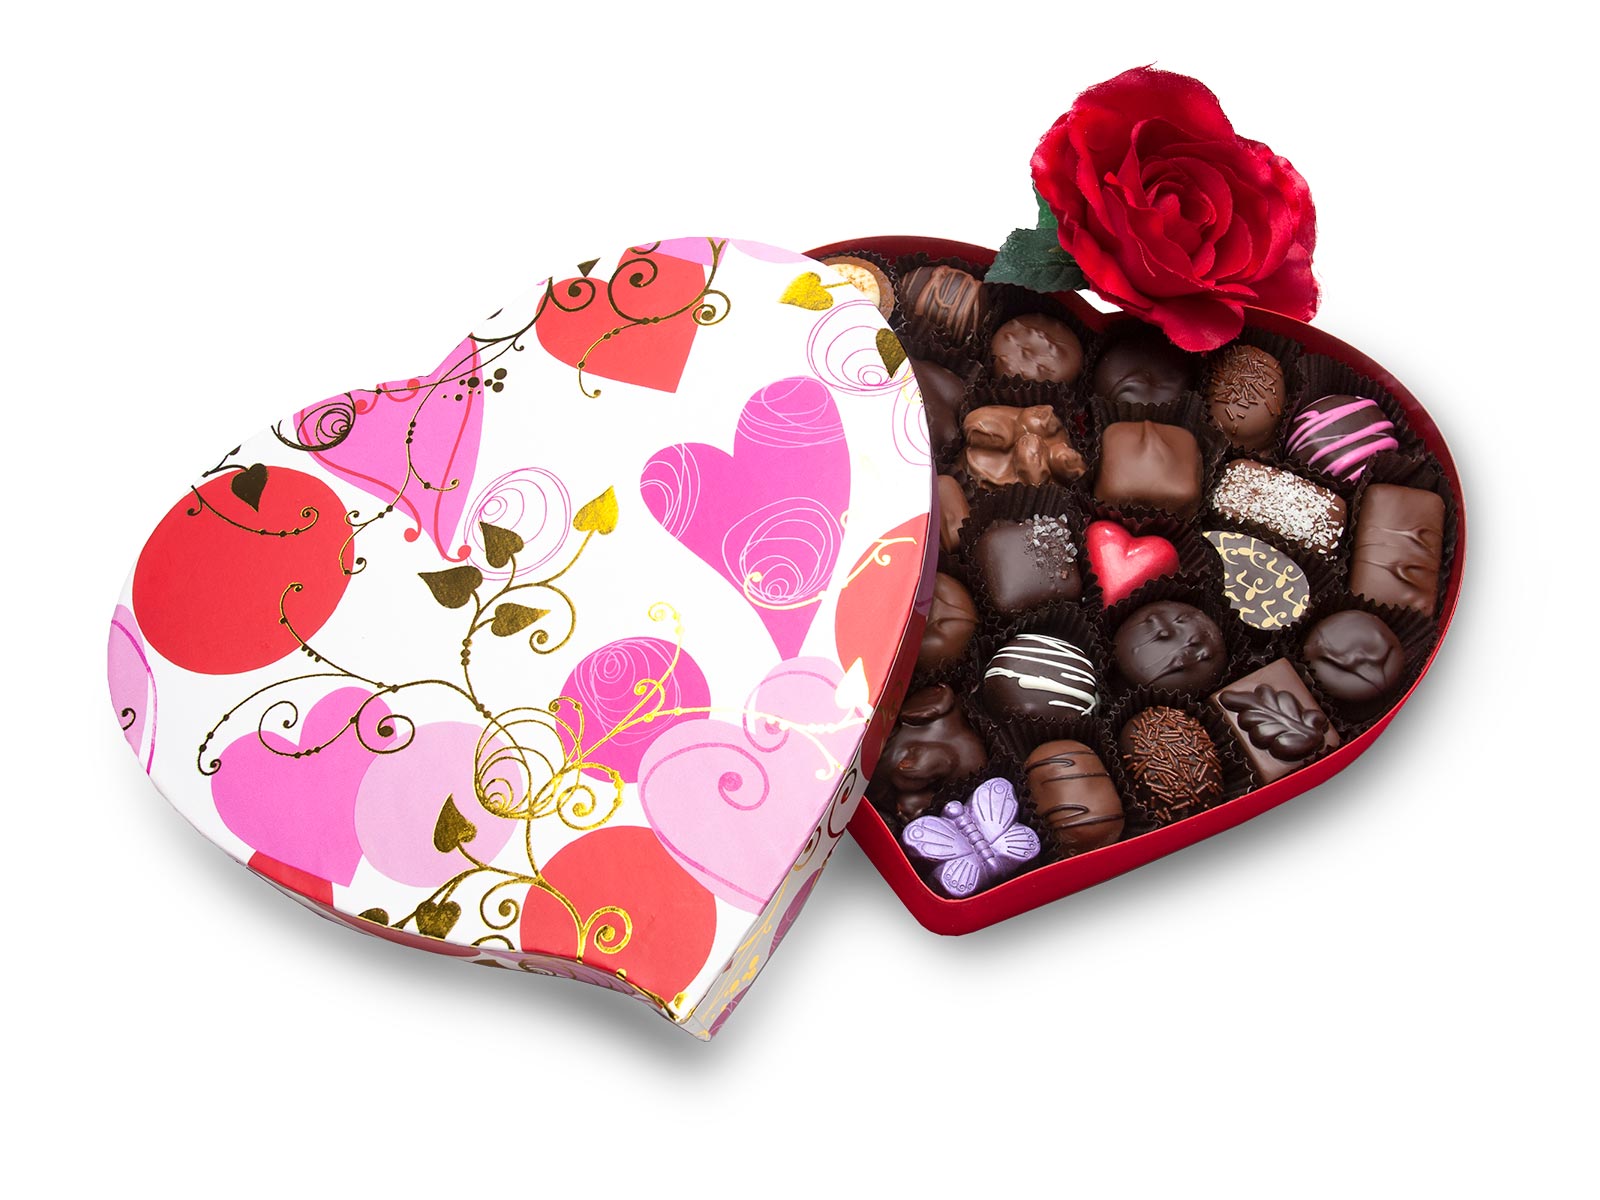 Heart Shaped Box of Chocolates: Grand Valentines Chocolate Heart Box